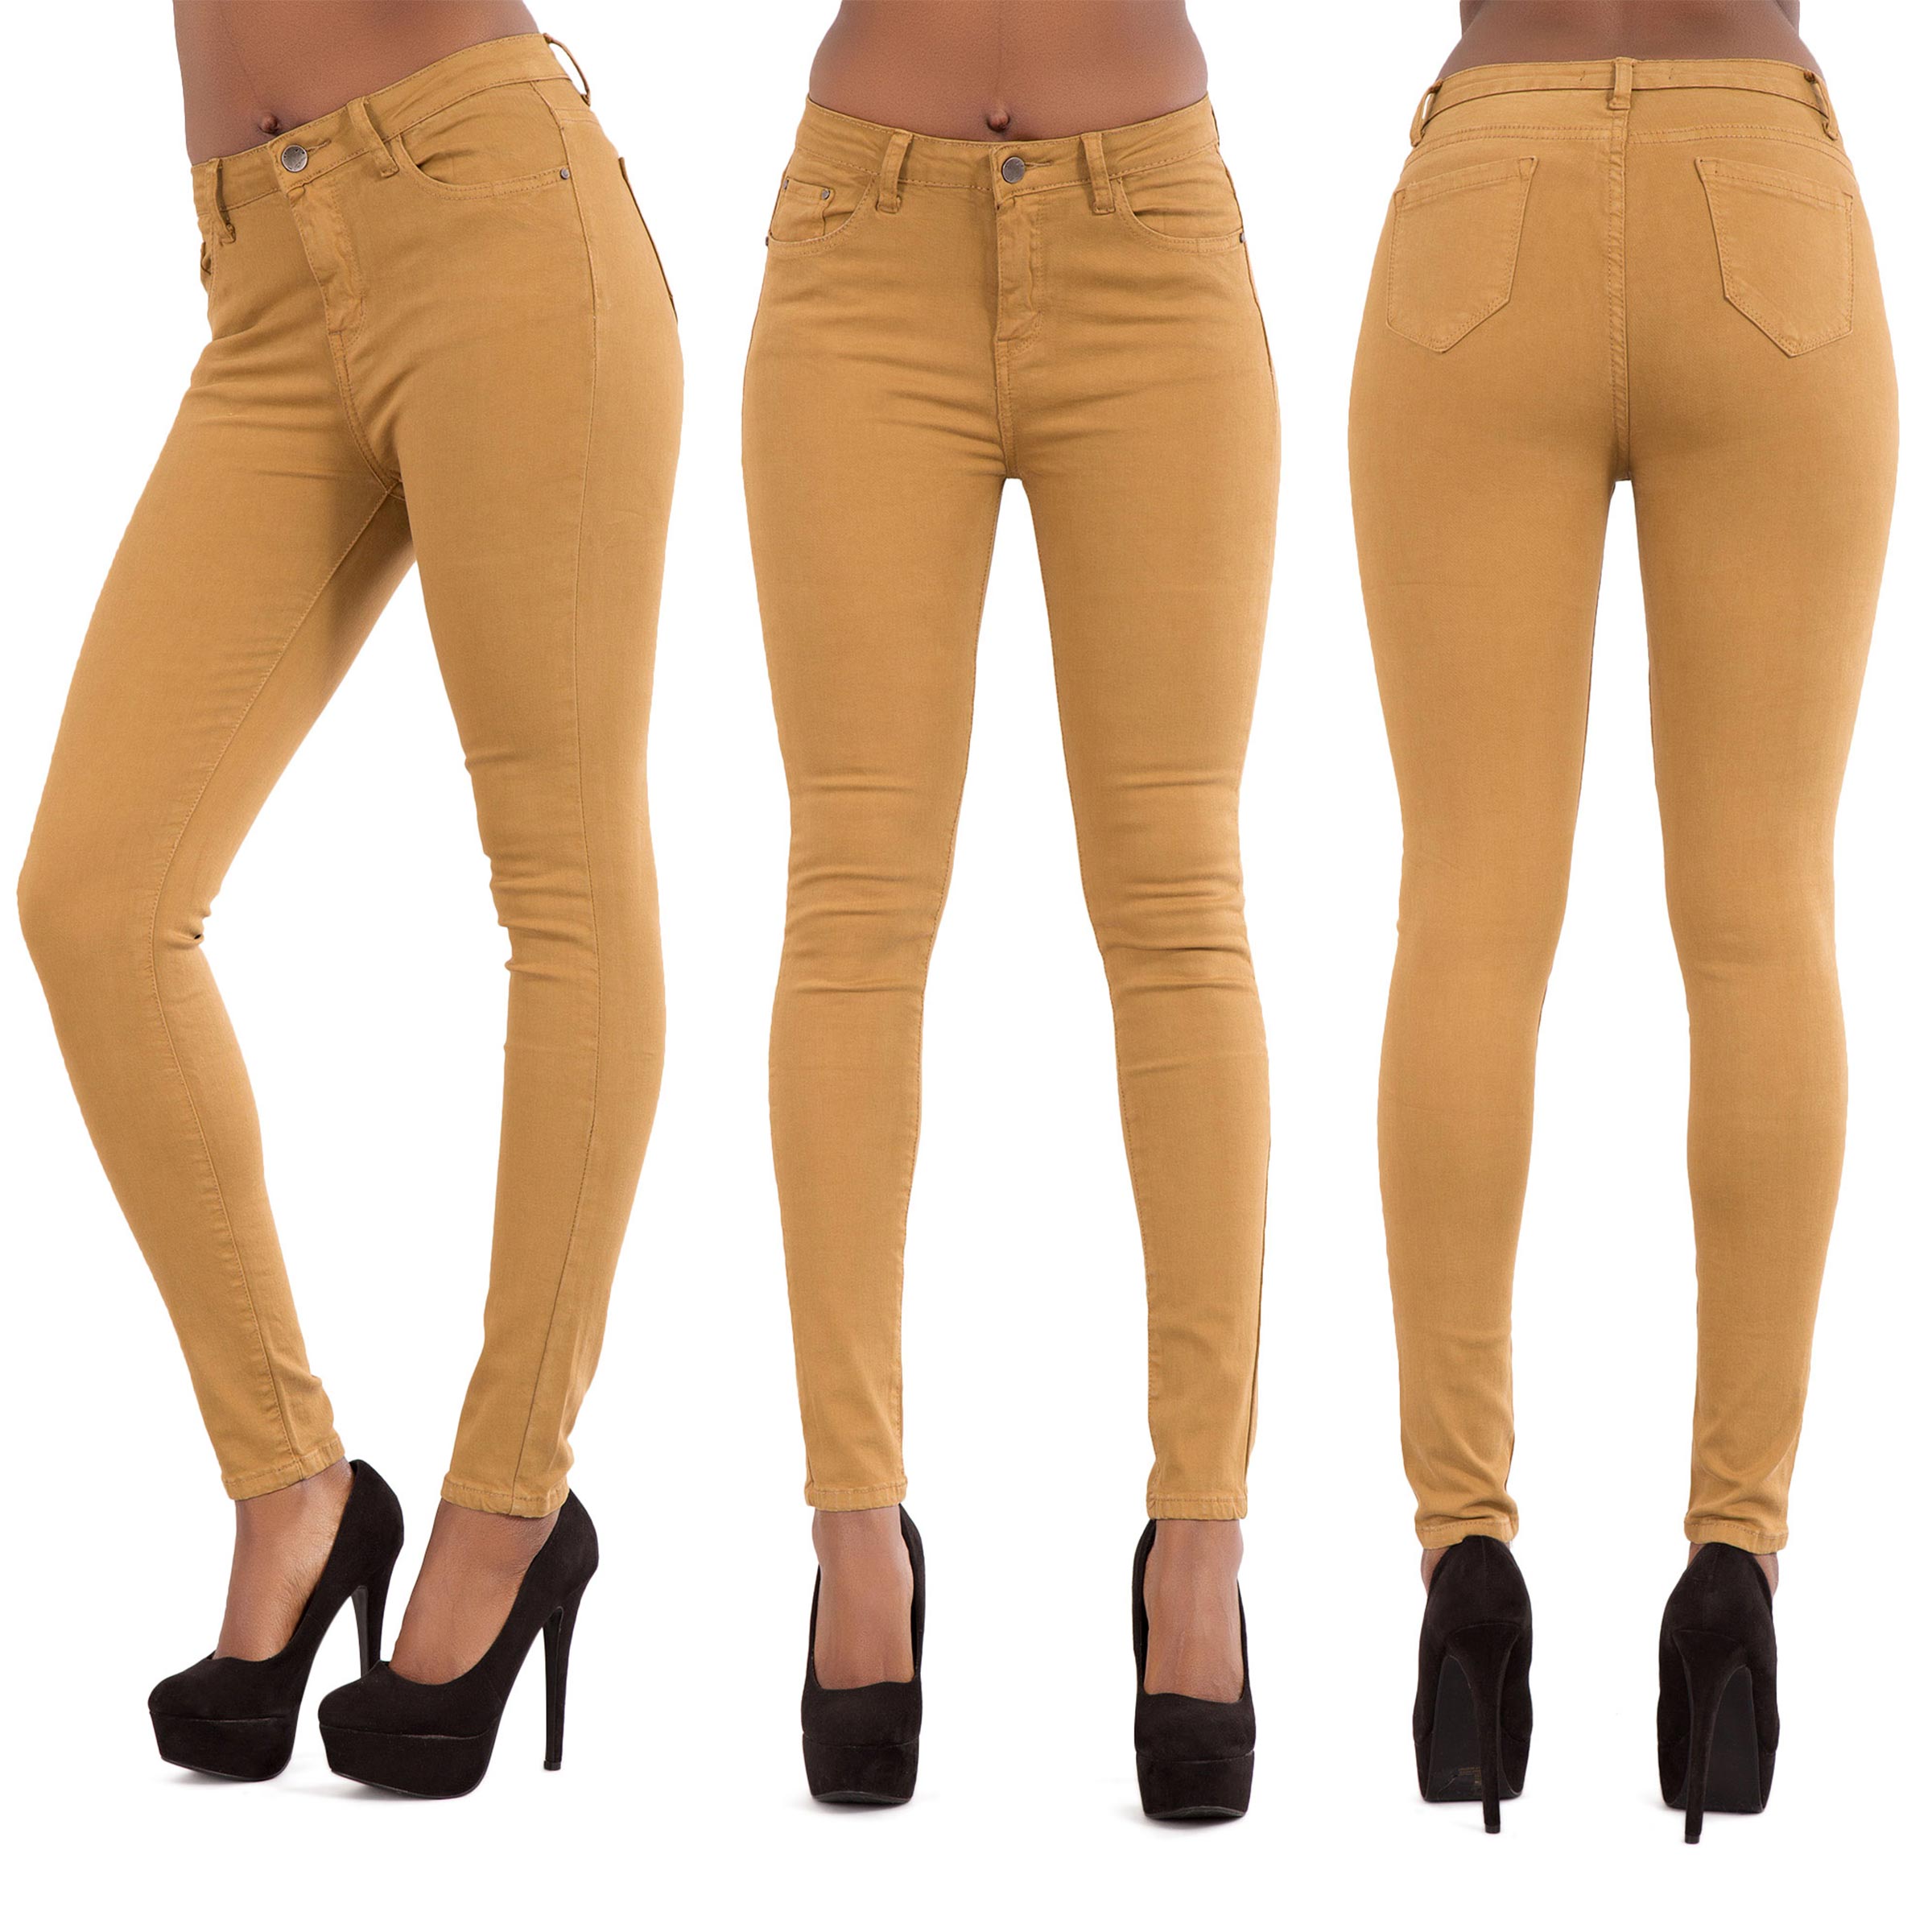 Le Donne 8 Colori Vita Alta Jeans Skinny Leg Stretch Denim Taglia 6 8